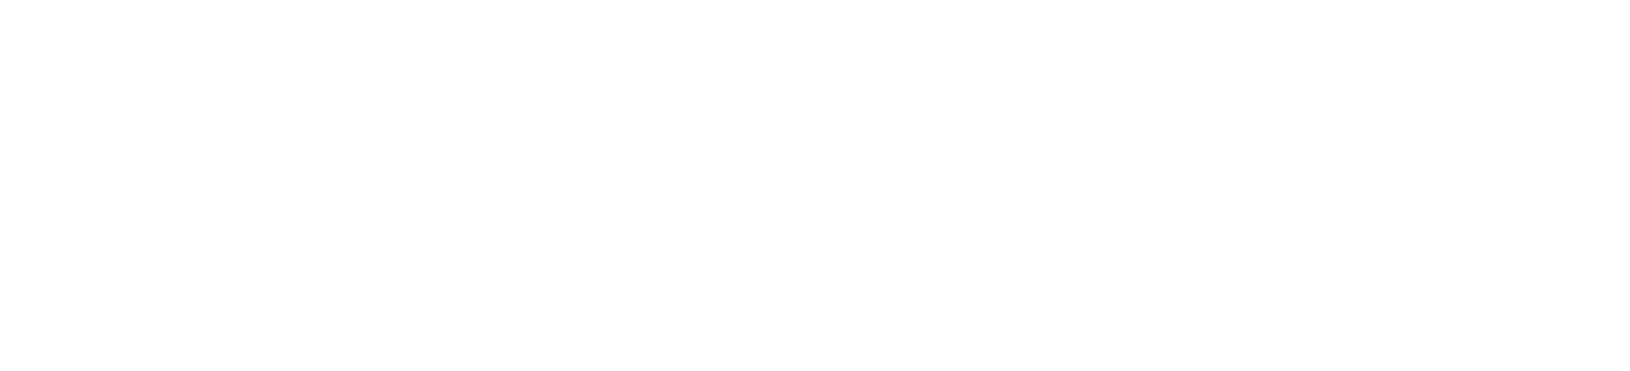 NW-FVA